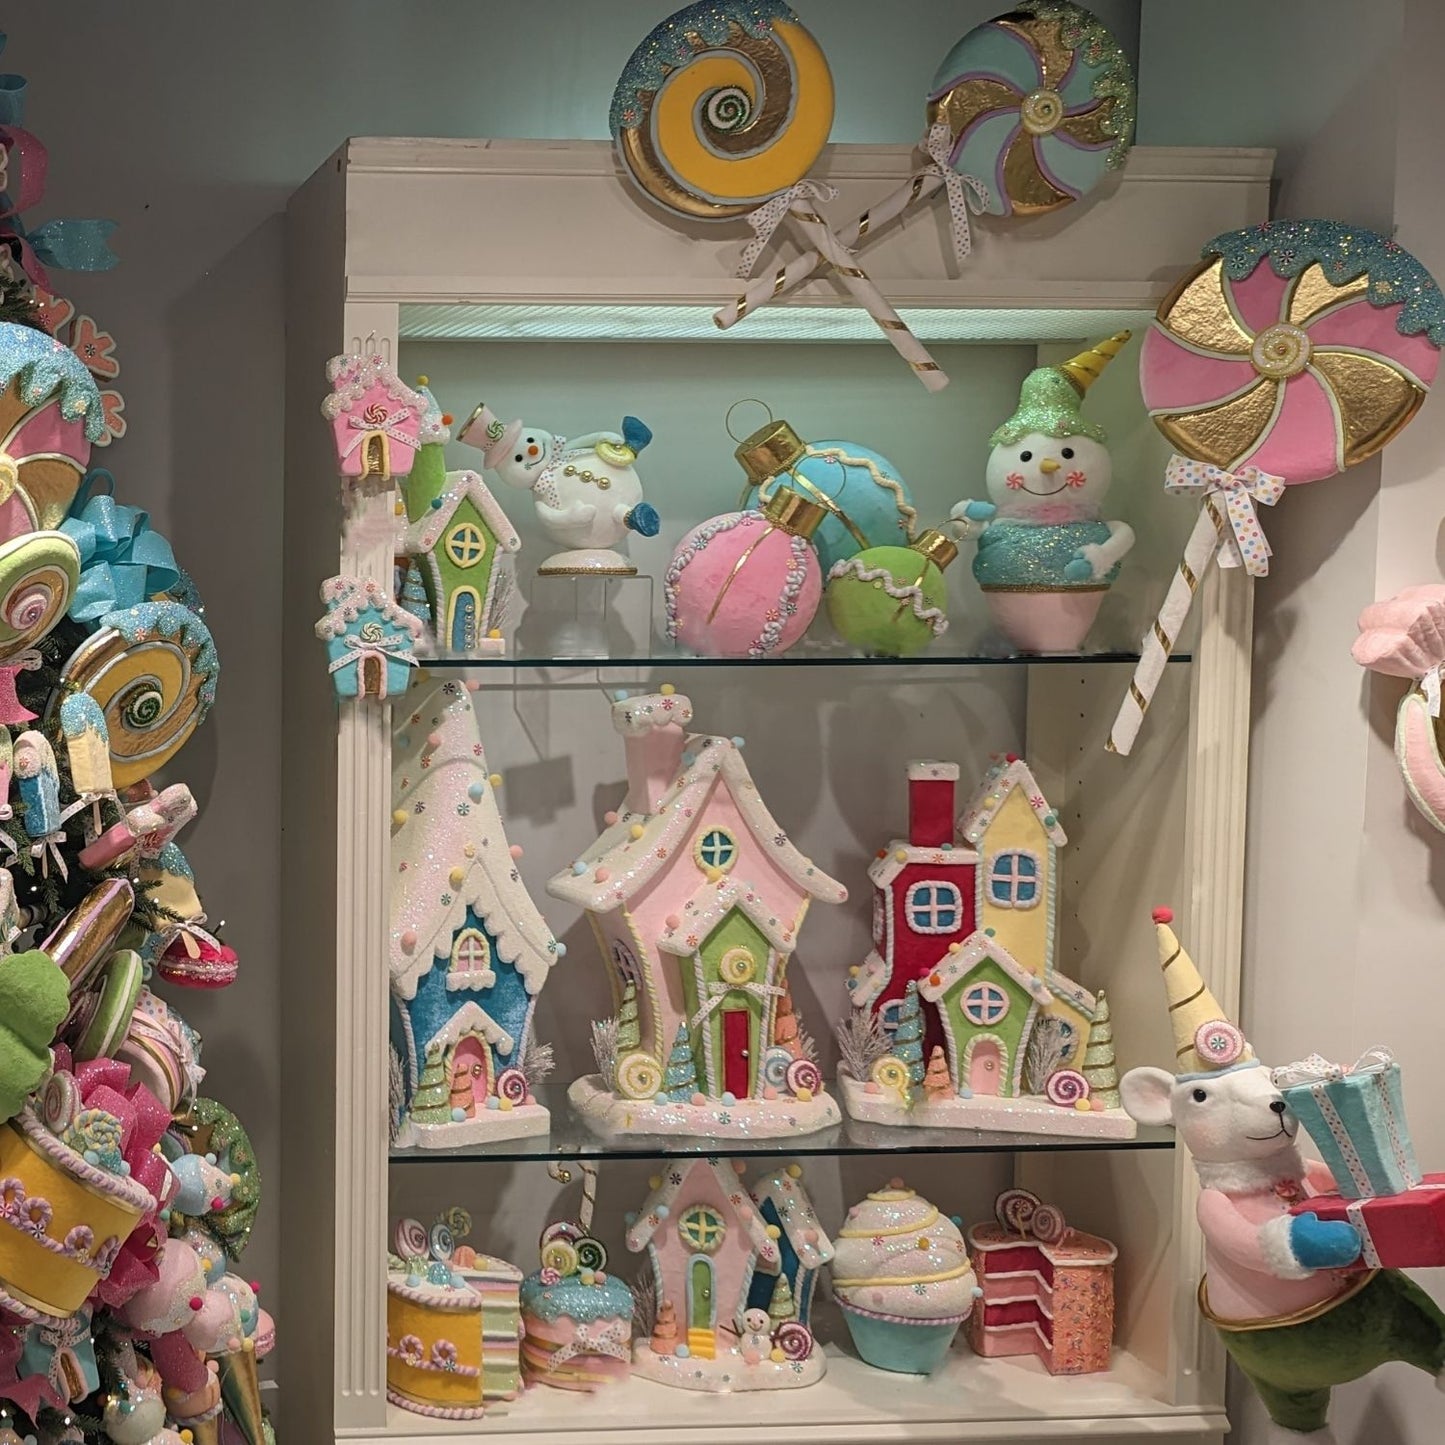 December Diamonds Snow Cream Shoppe 14" Pink/Blue Candy House Figurine